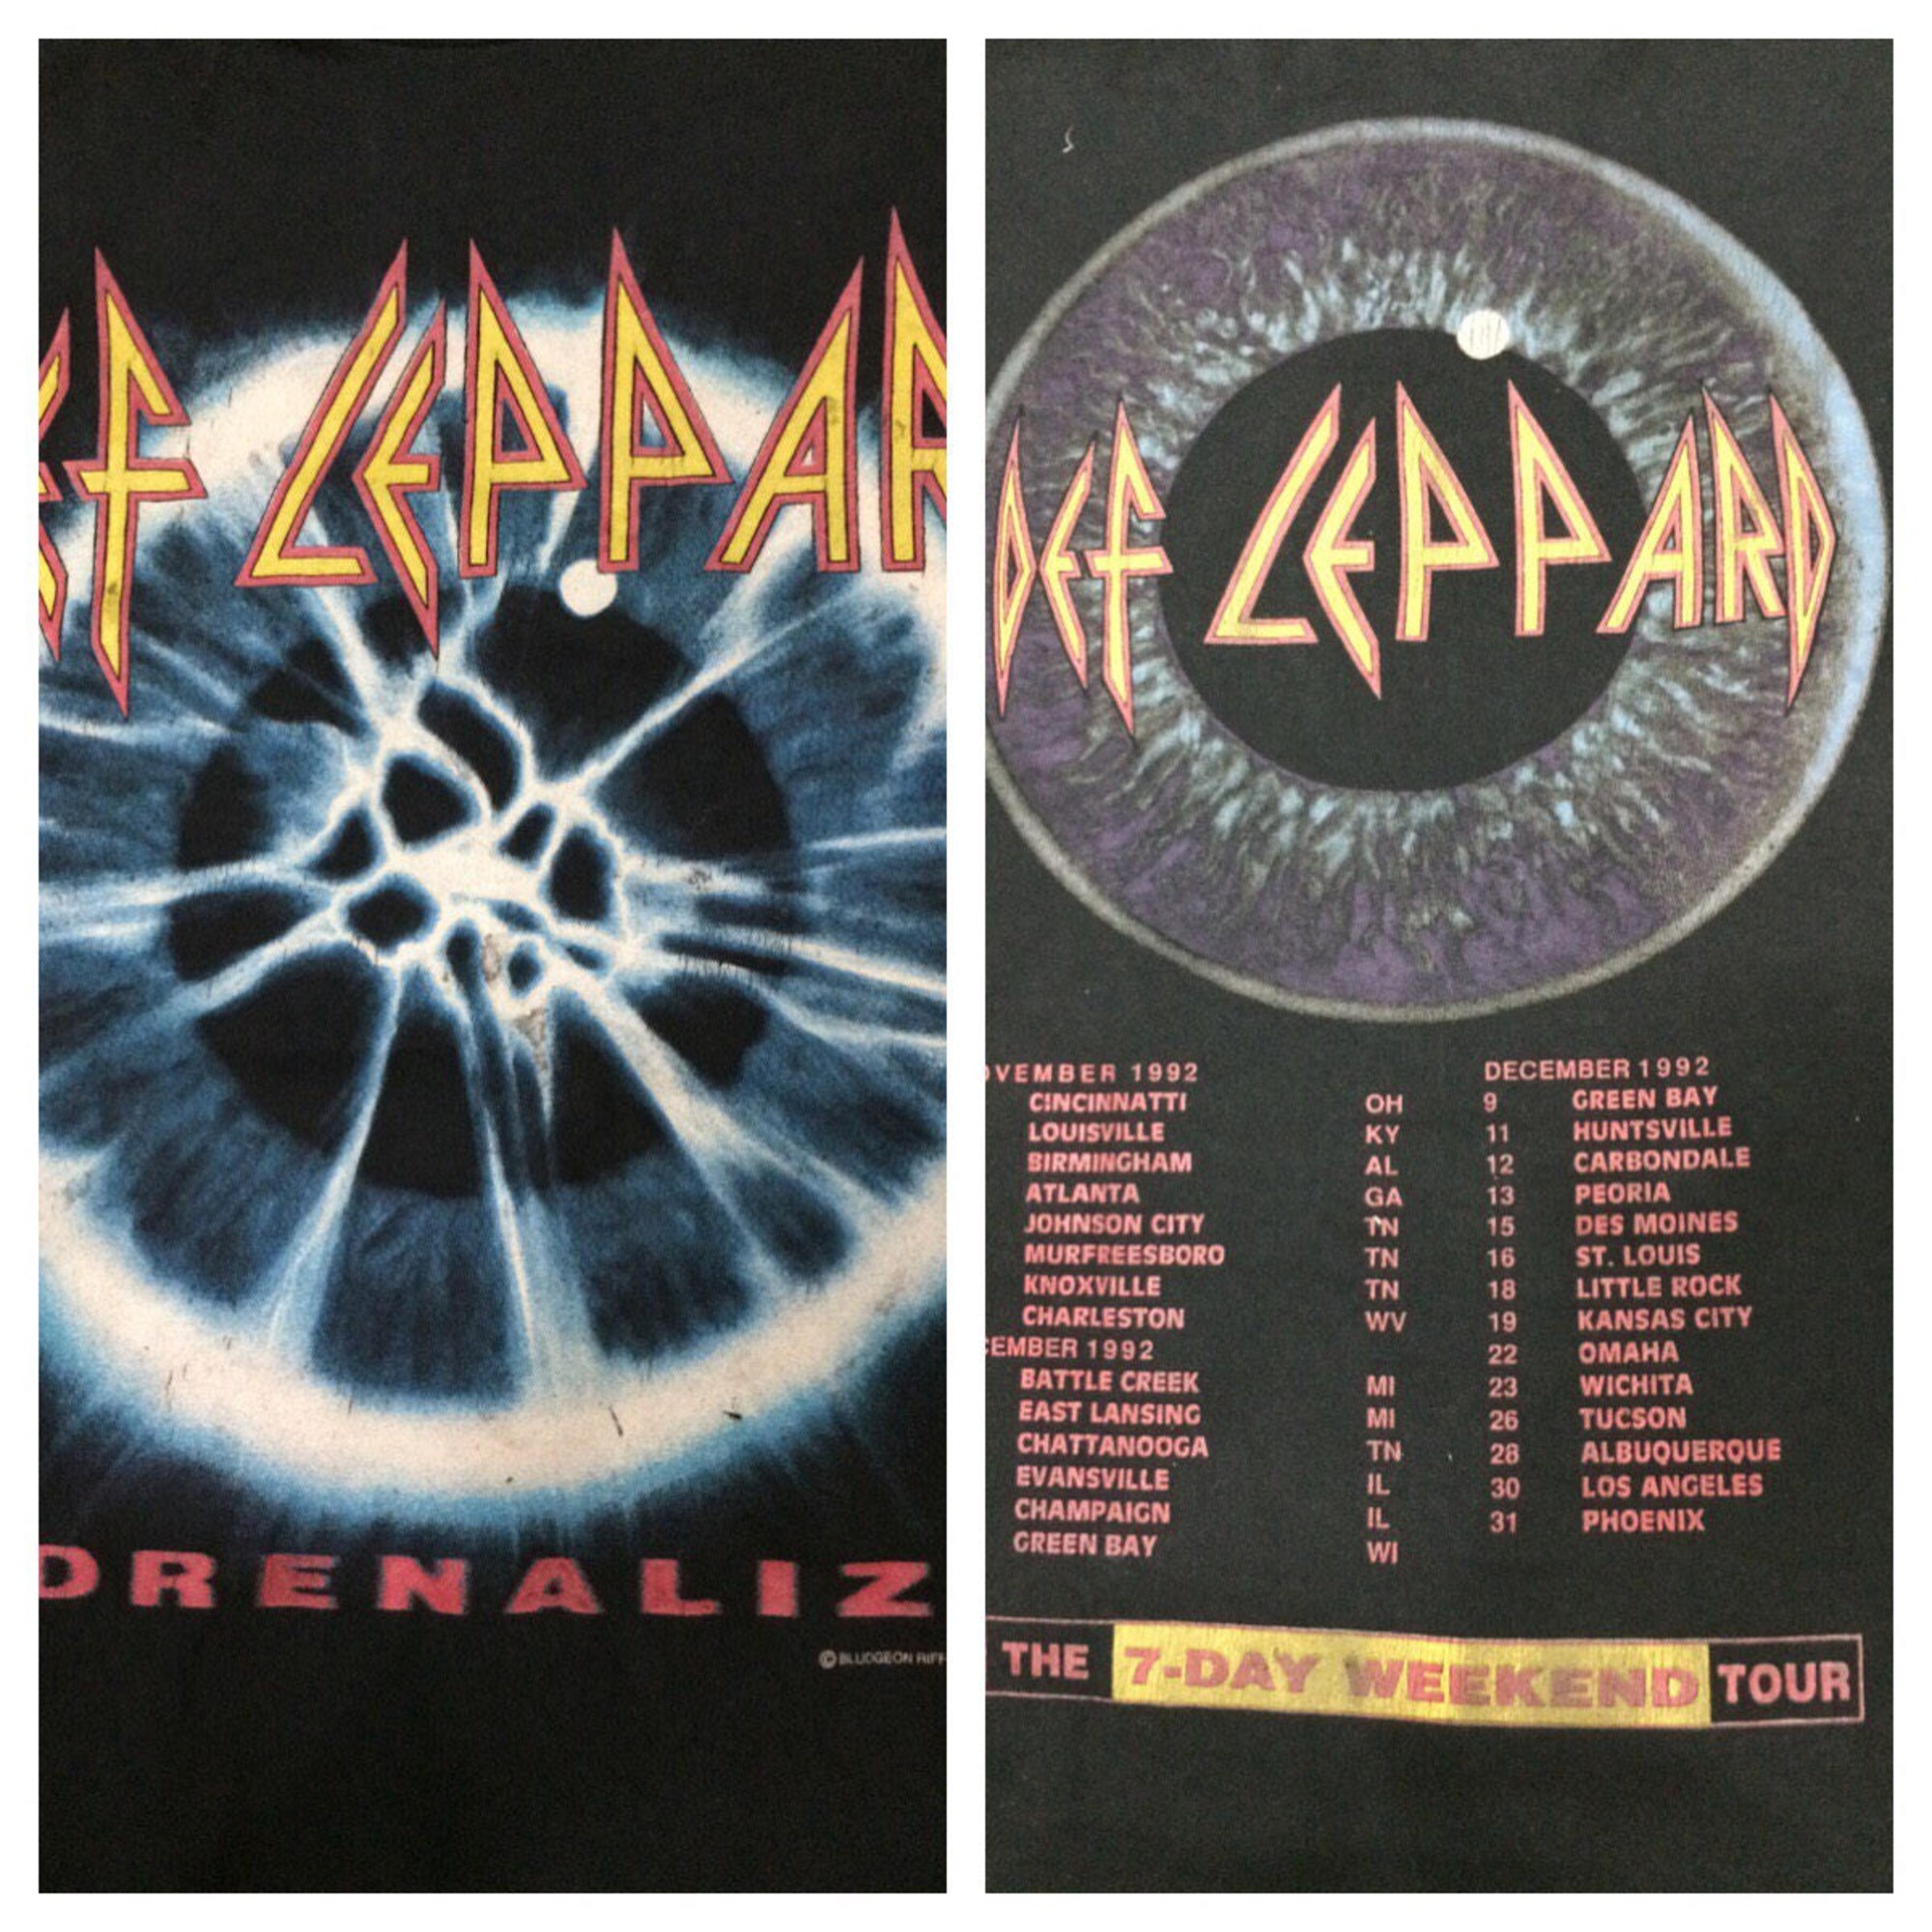 Vintage 90s Def Leppard Adrenalize Concert Tour Rock Band Tshirt